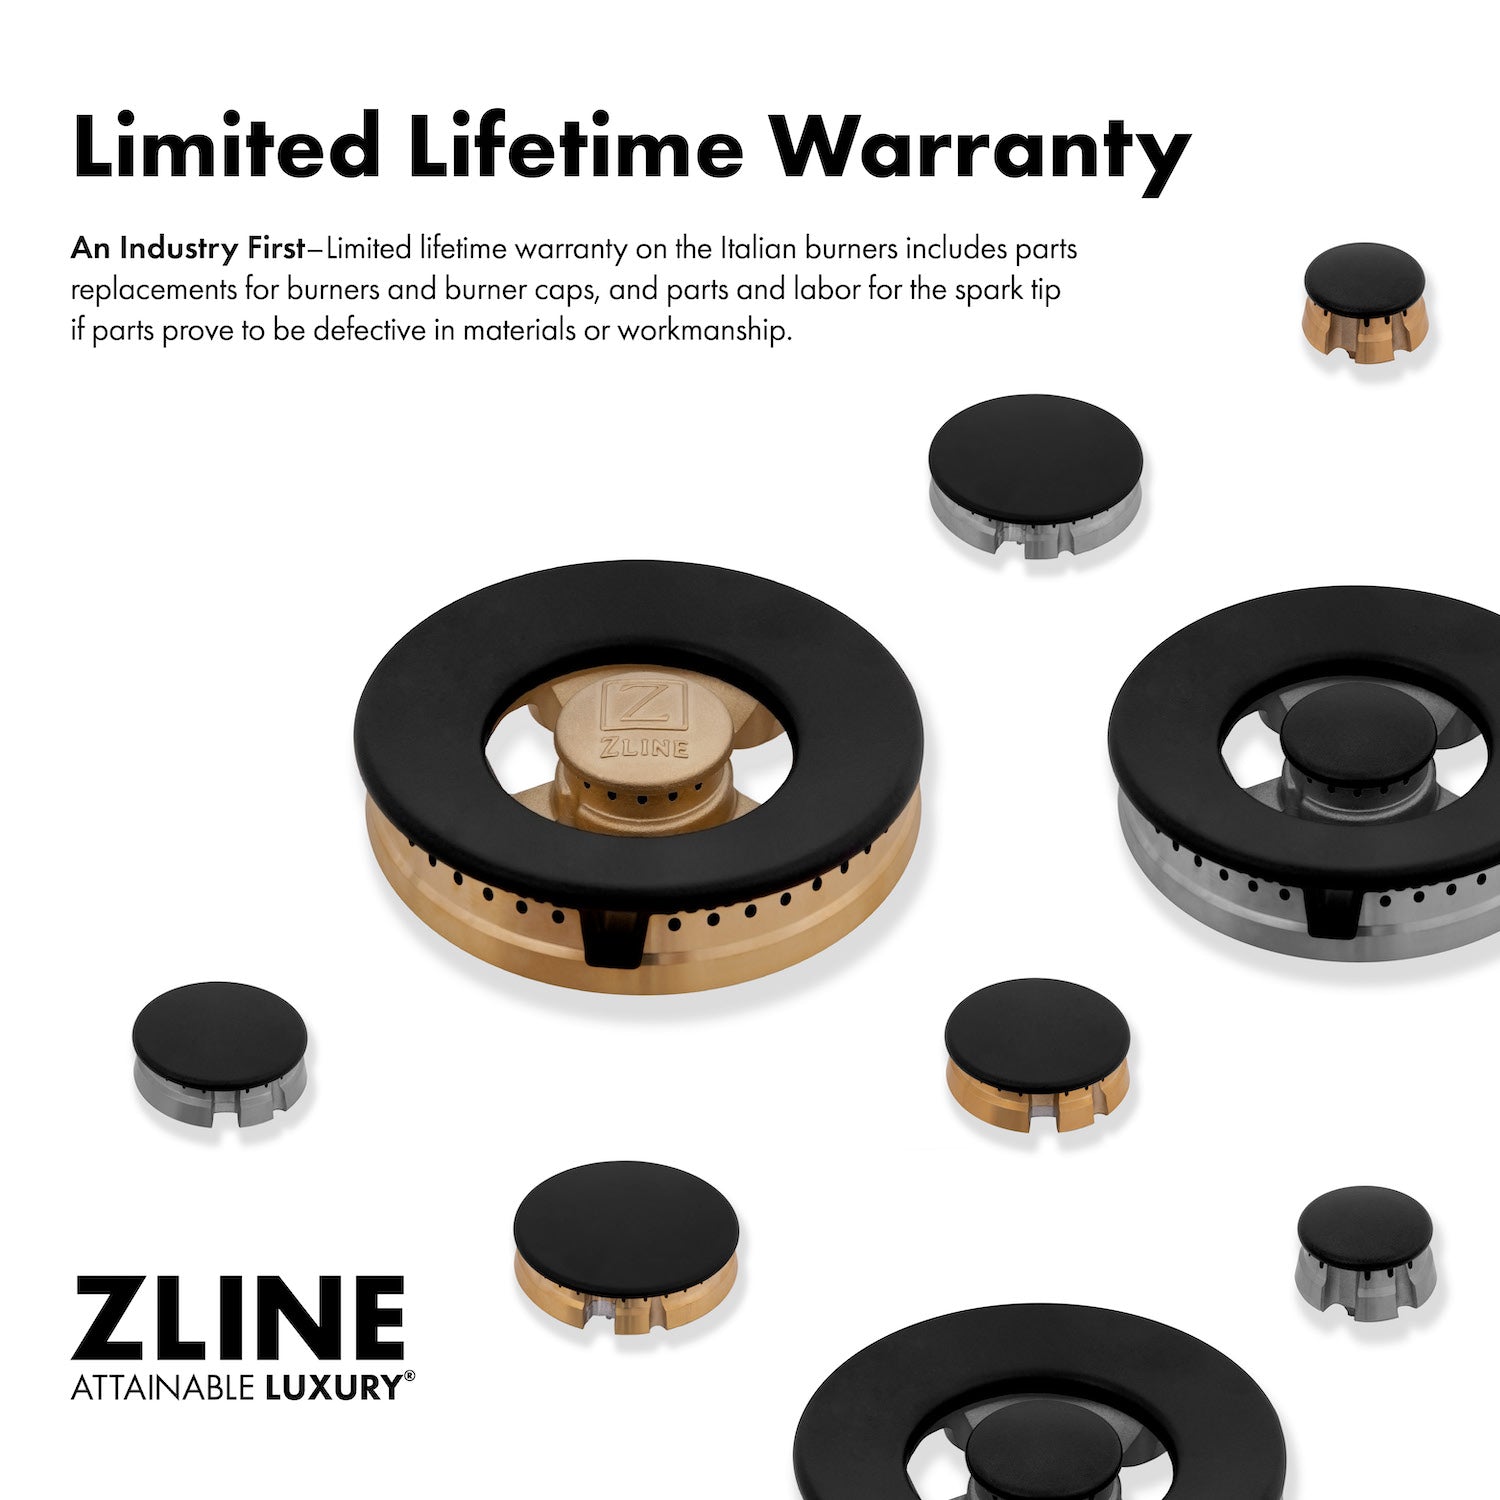 Limited lifetime warranty on ZLINE burners policy details.